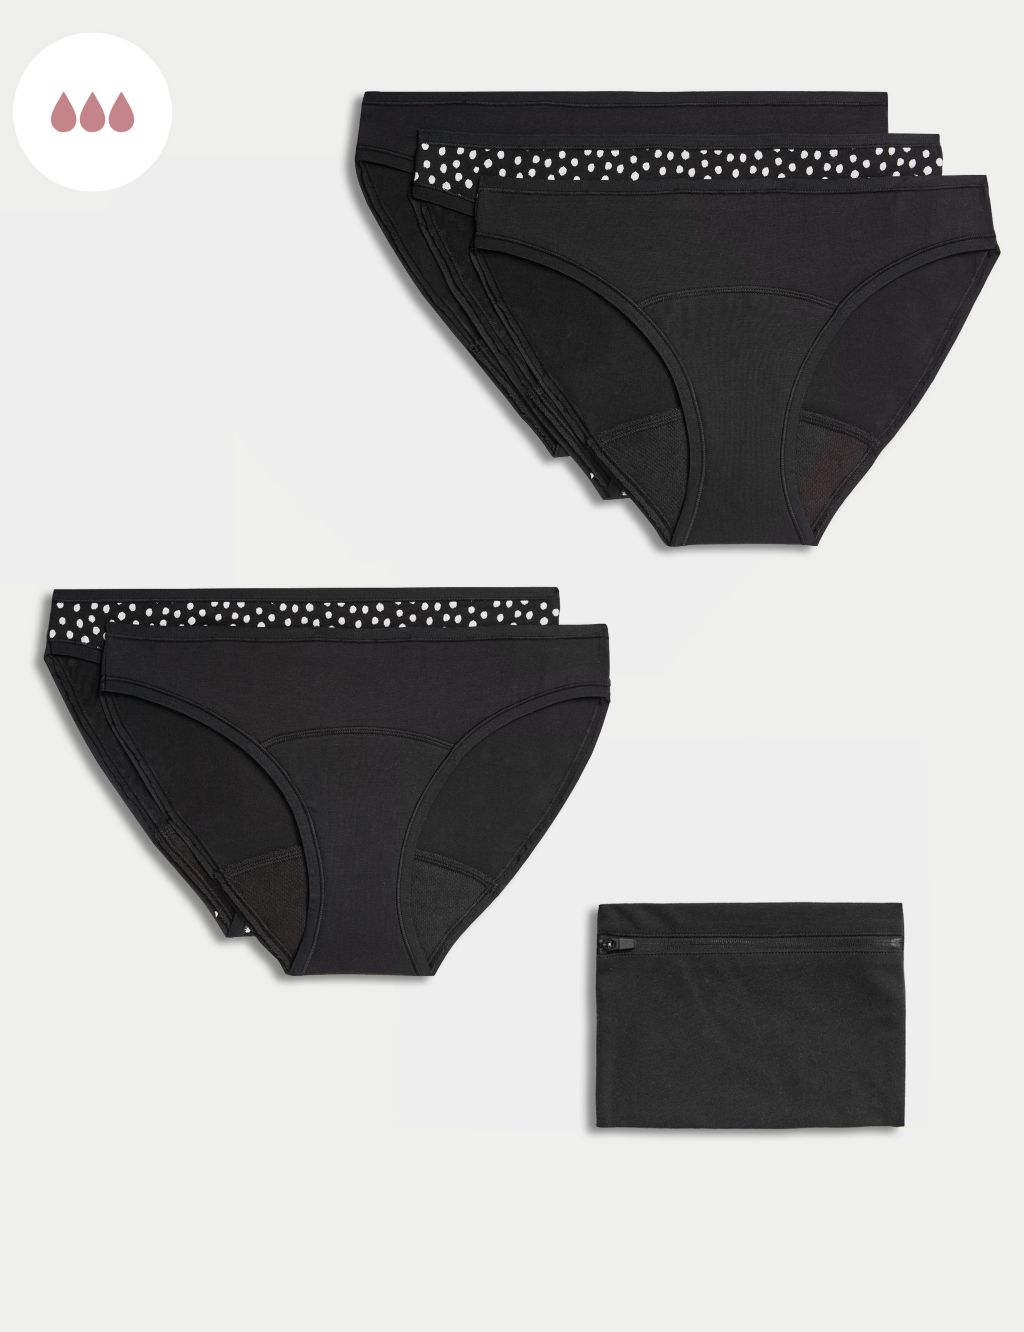 Bundle] Daily sexy set period pants, period underwear, period